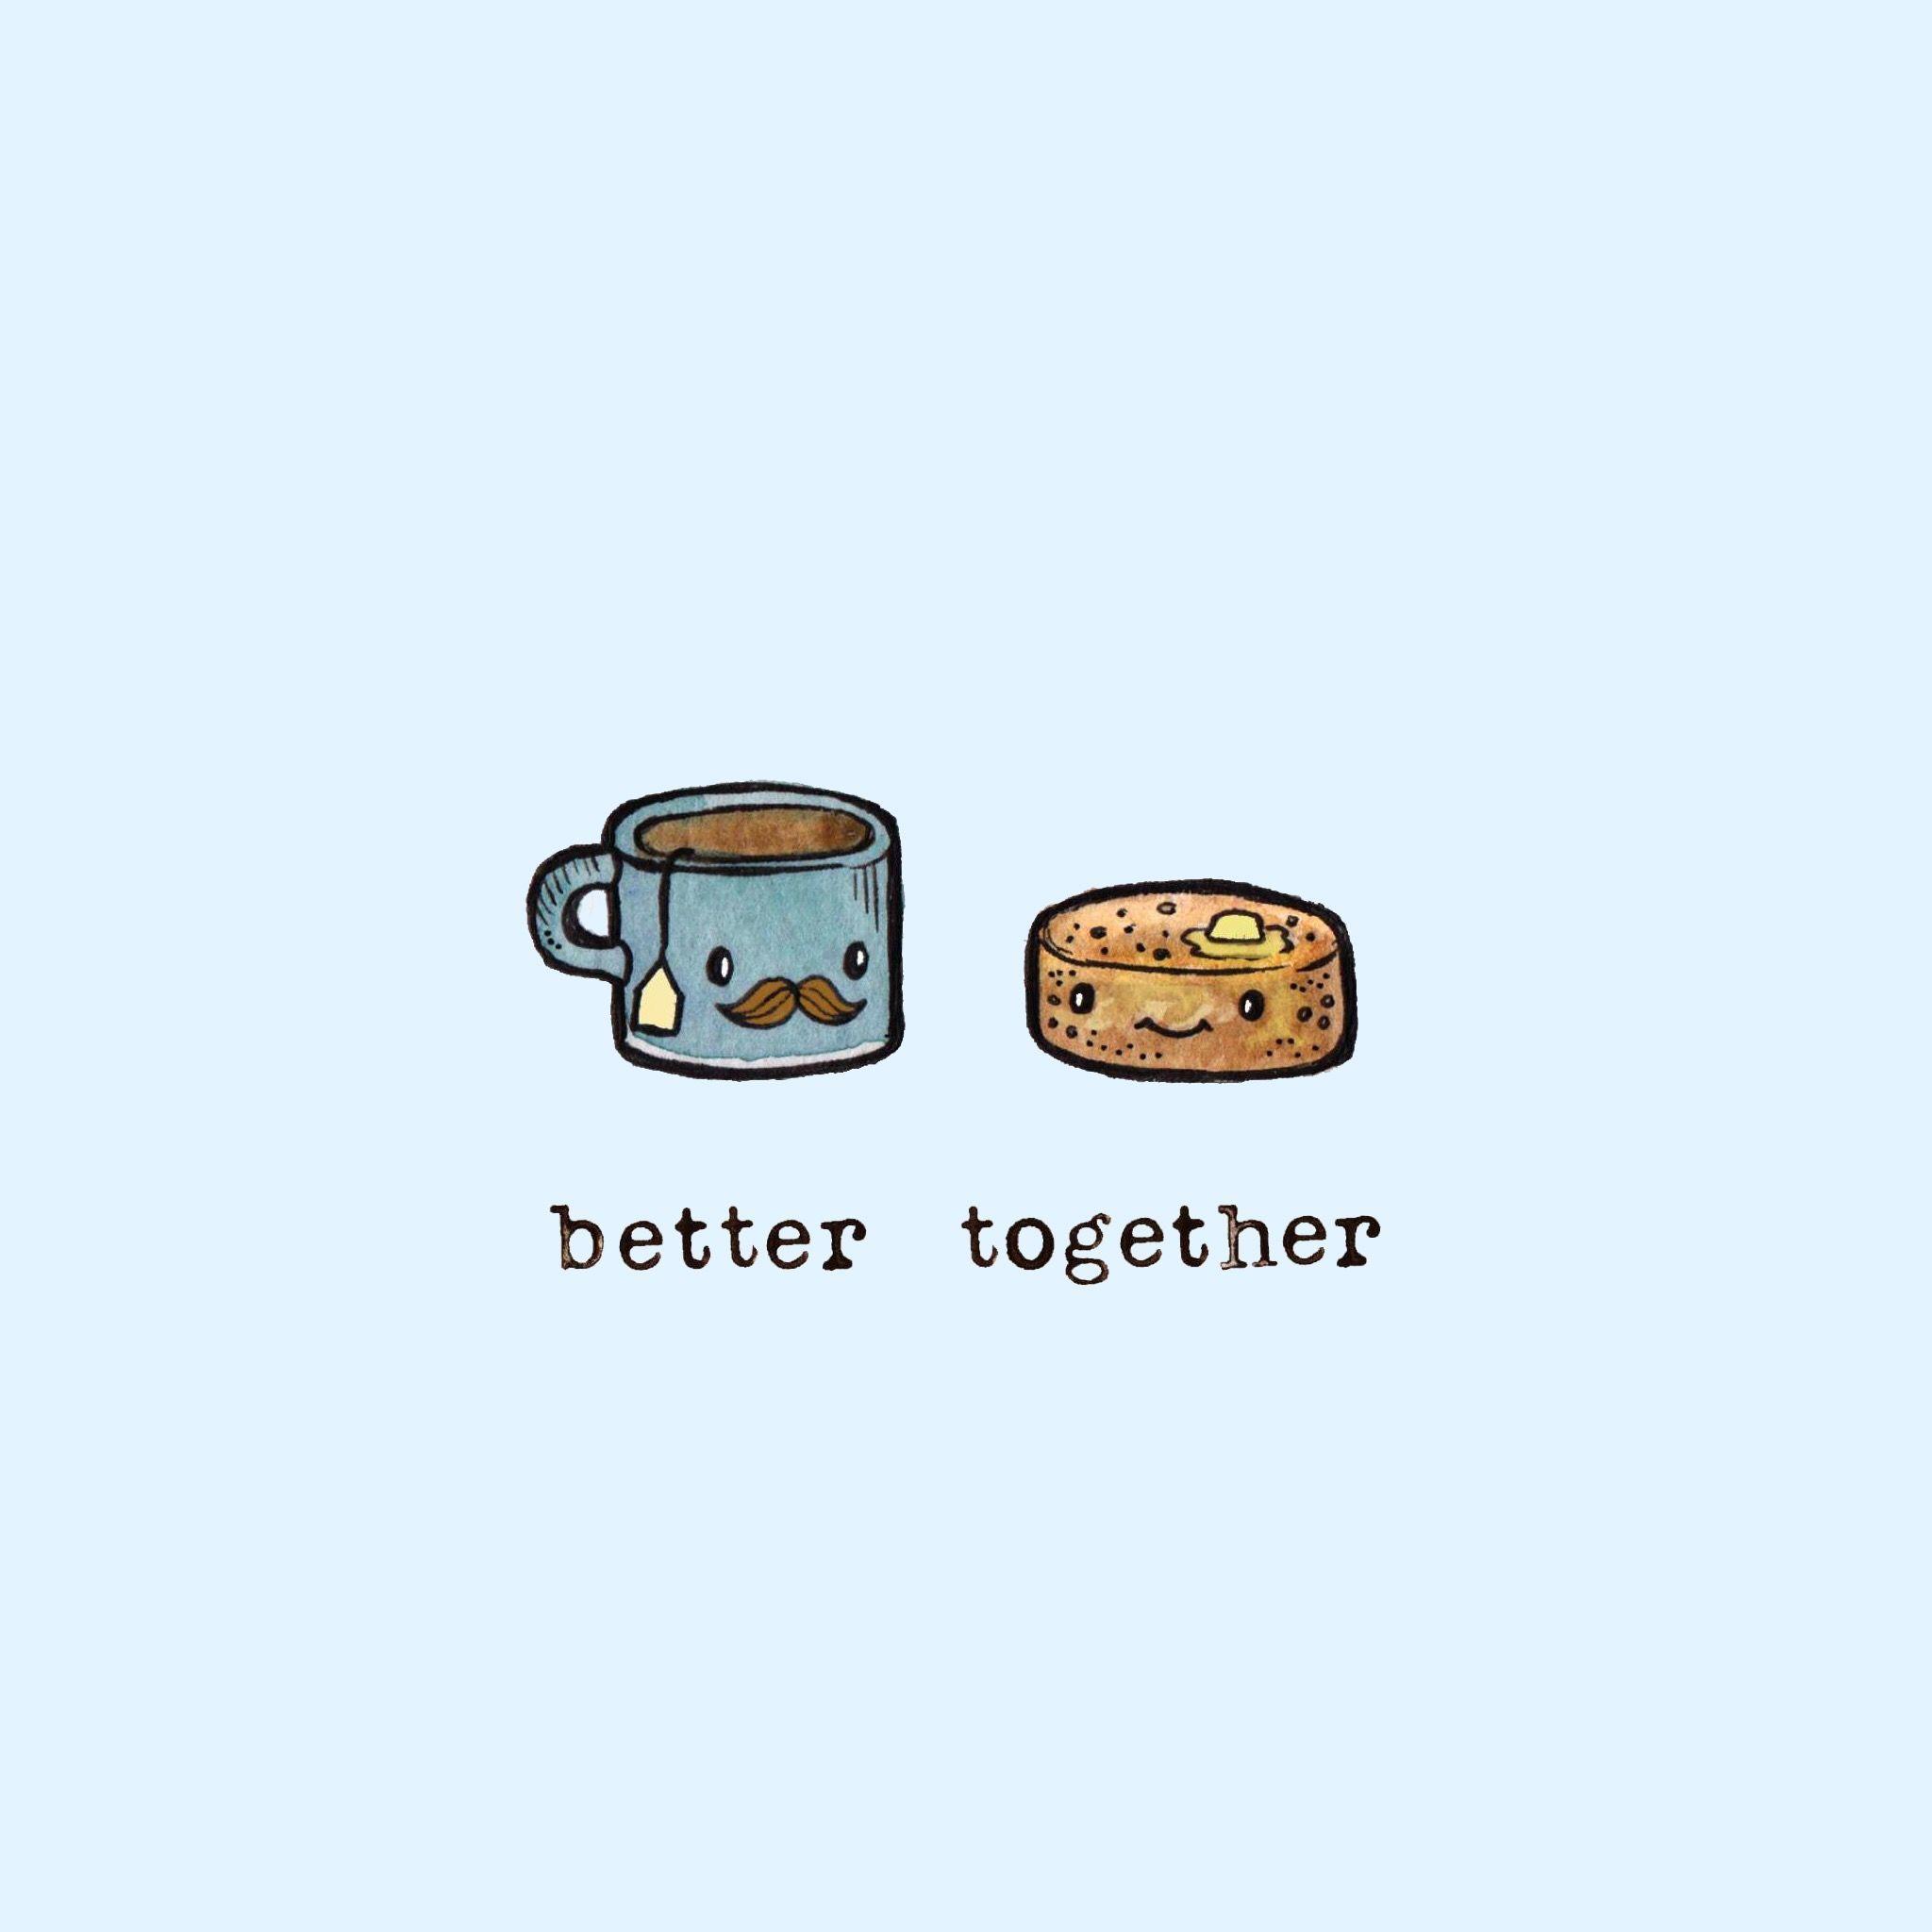 Much better together. Better together торт. Better together мемы. Better together. Better together Condensed.